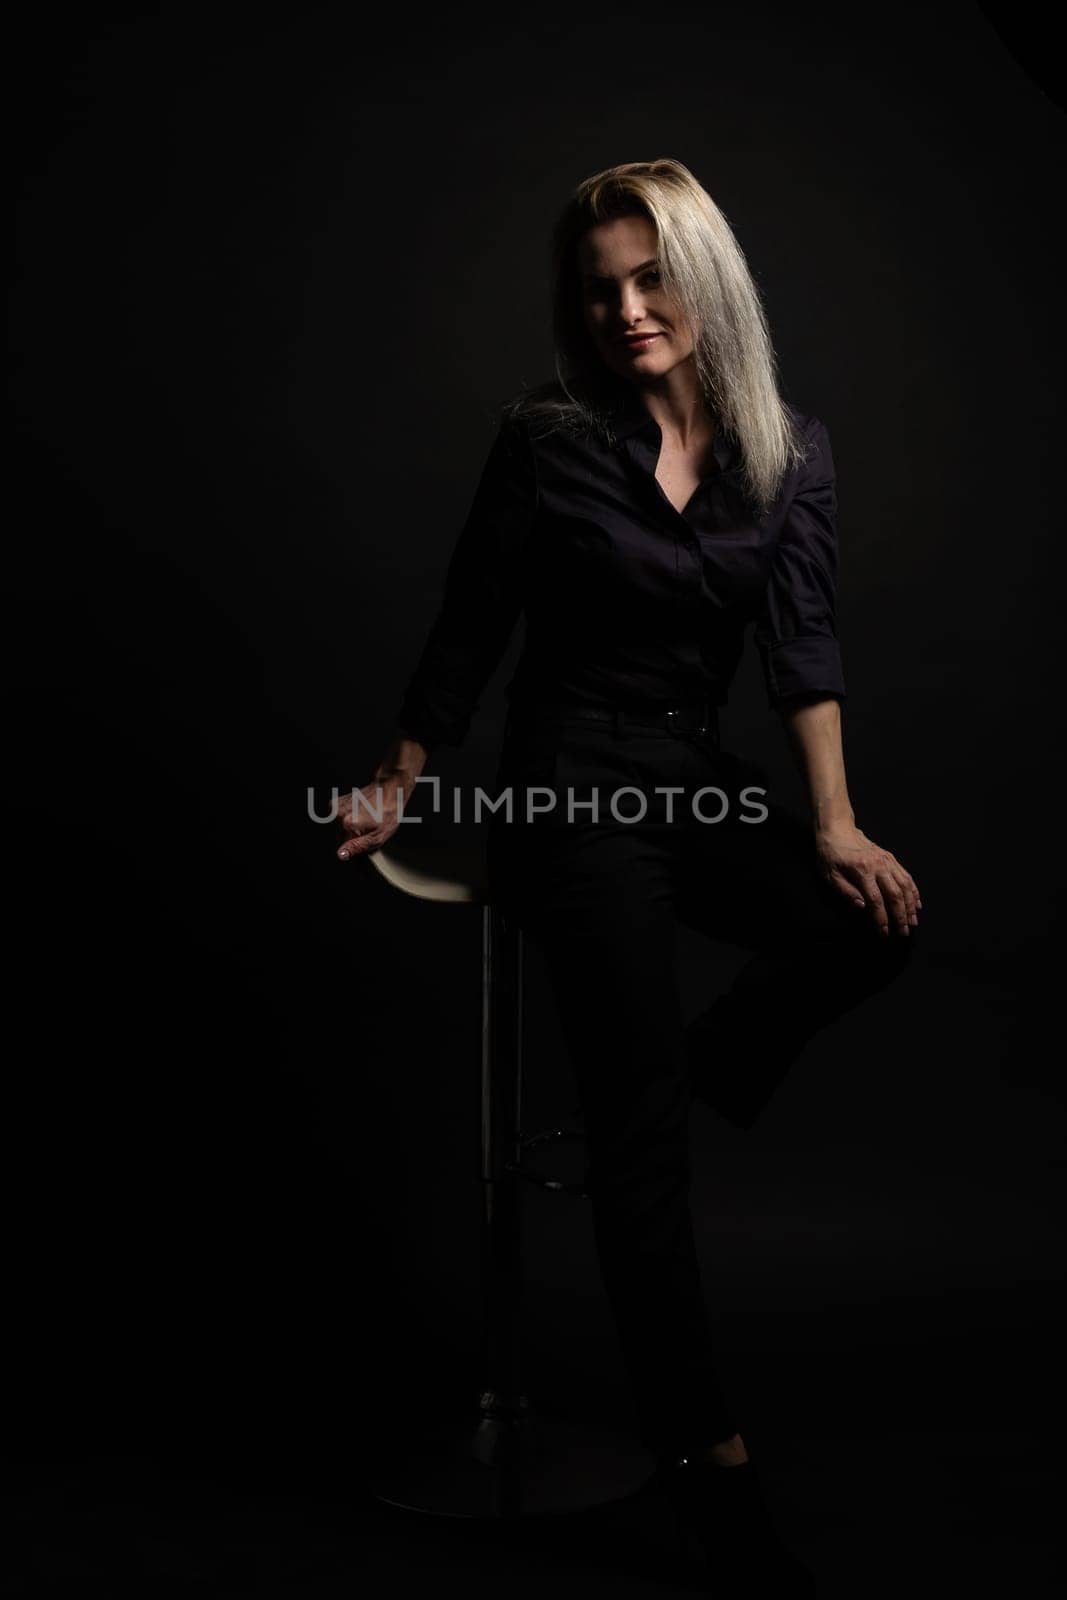 Blonde woman portrait, attractive adult girl in studio over black background